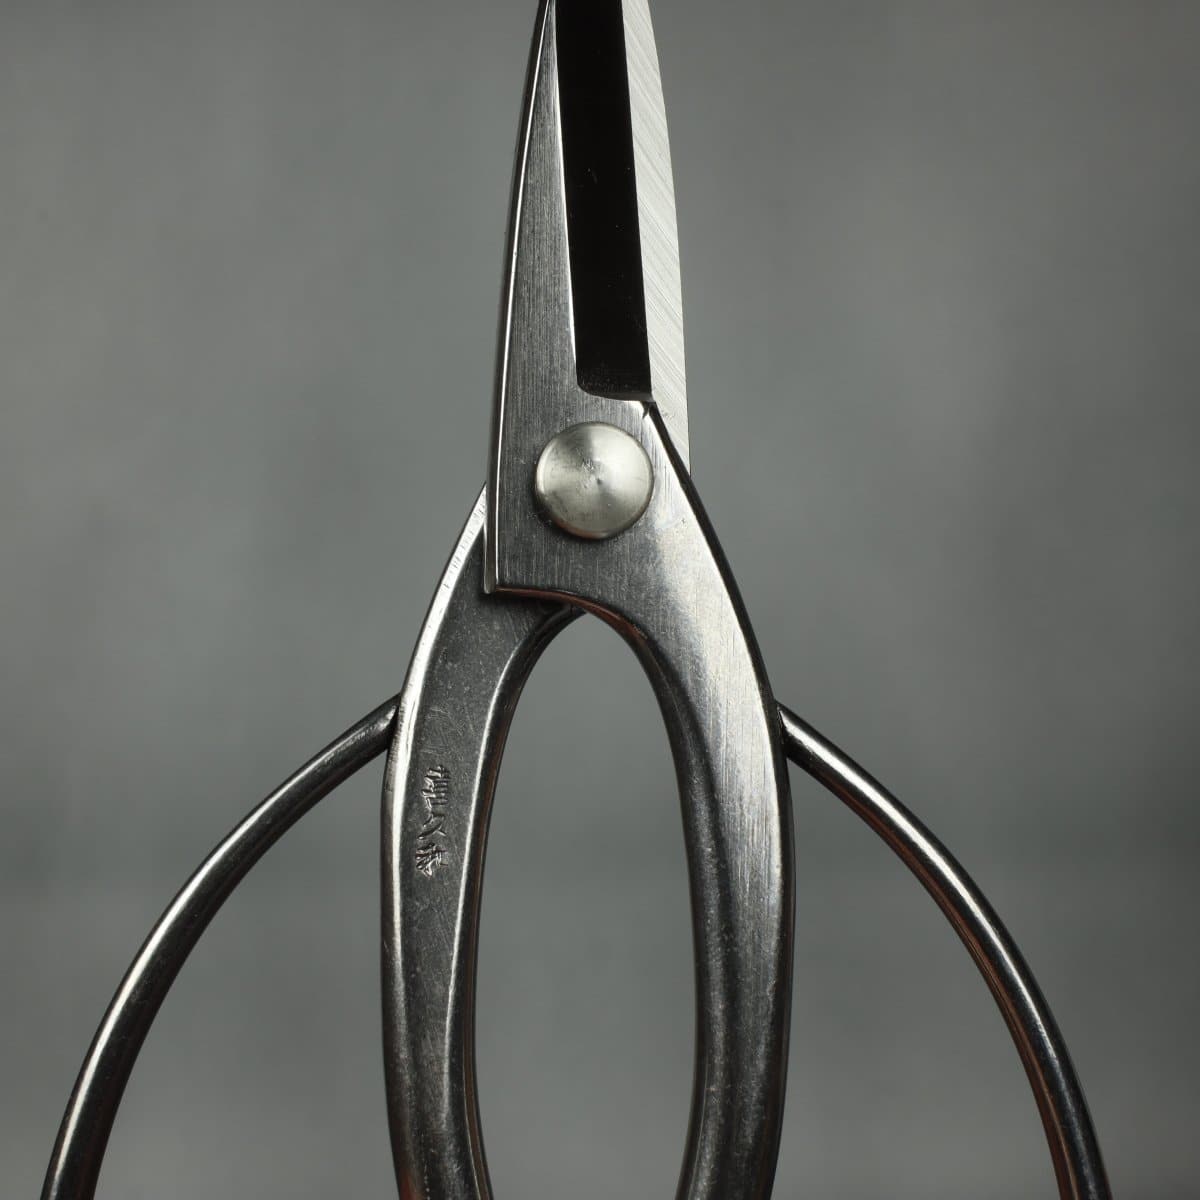 180mm Stainless Steel Bonsai Root Scissors makers mark